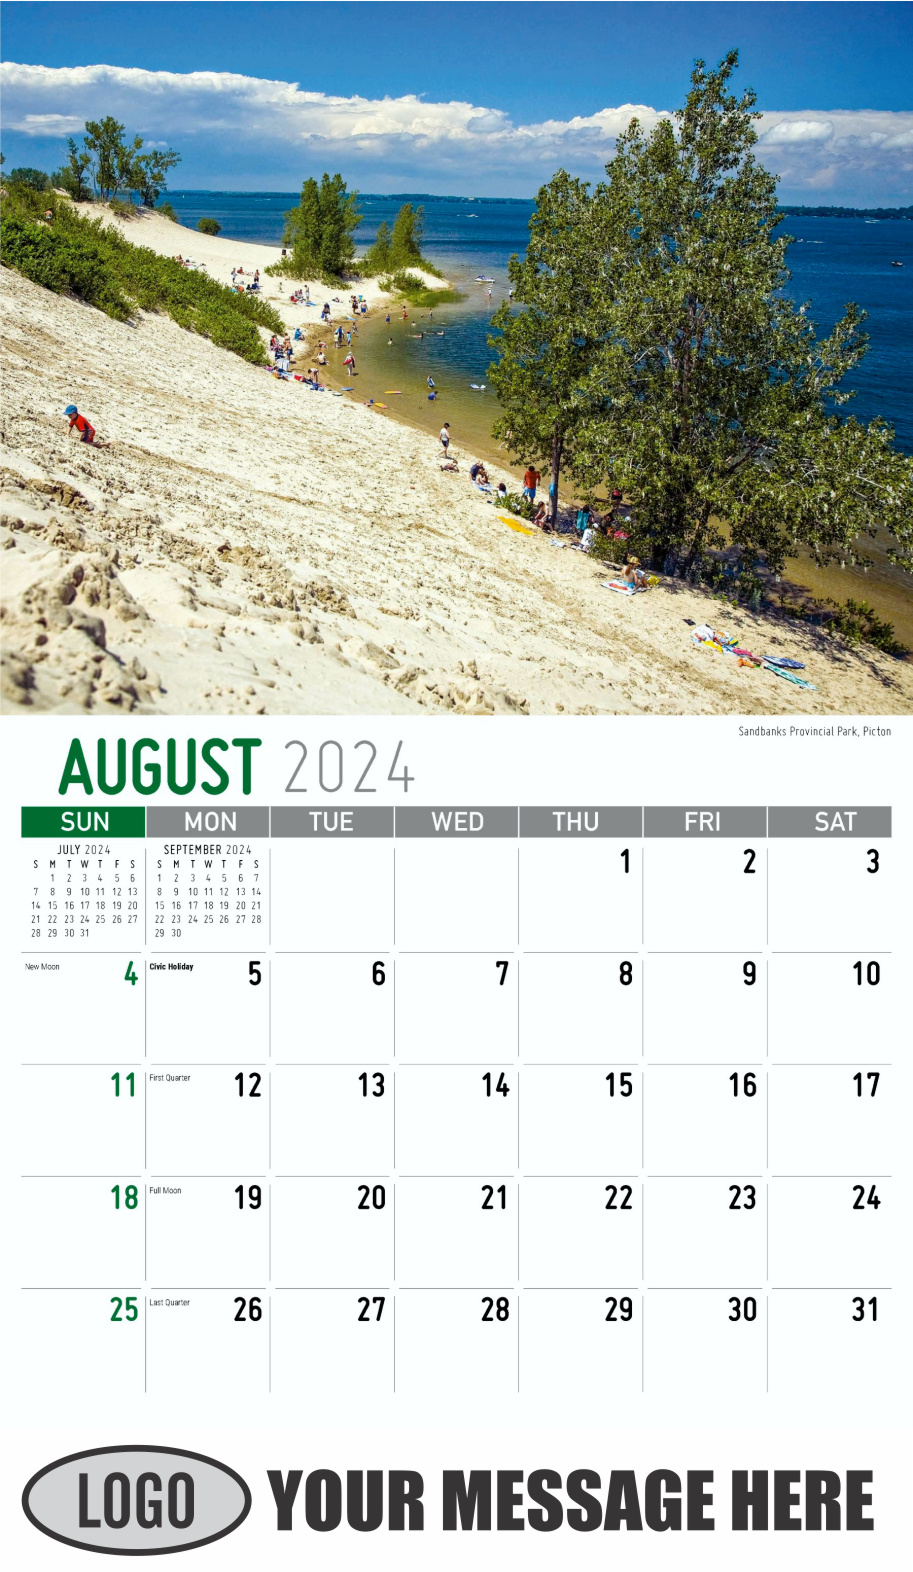 Scenes of Ontario 2024 Business Promo Wall Calendar - August